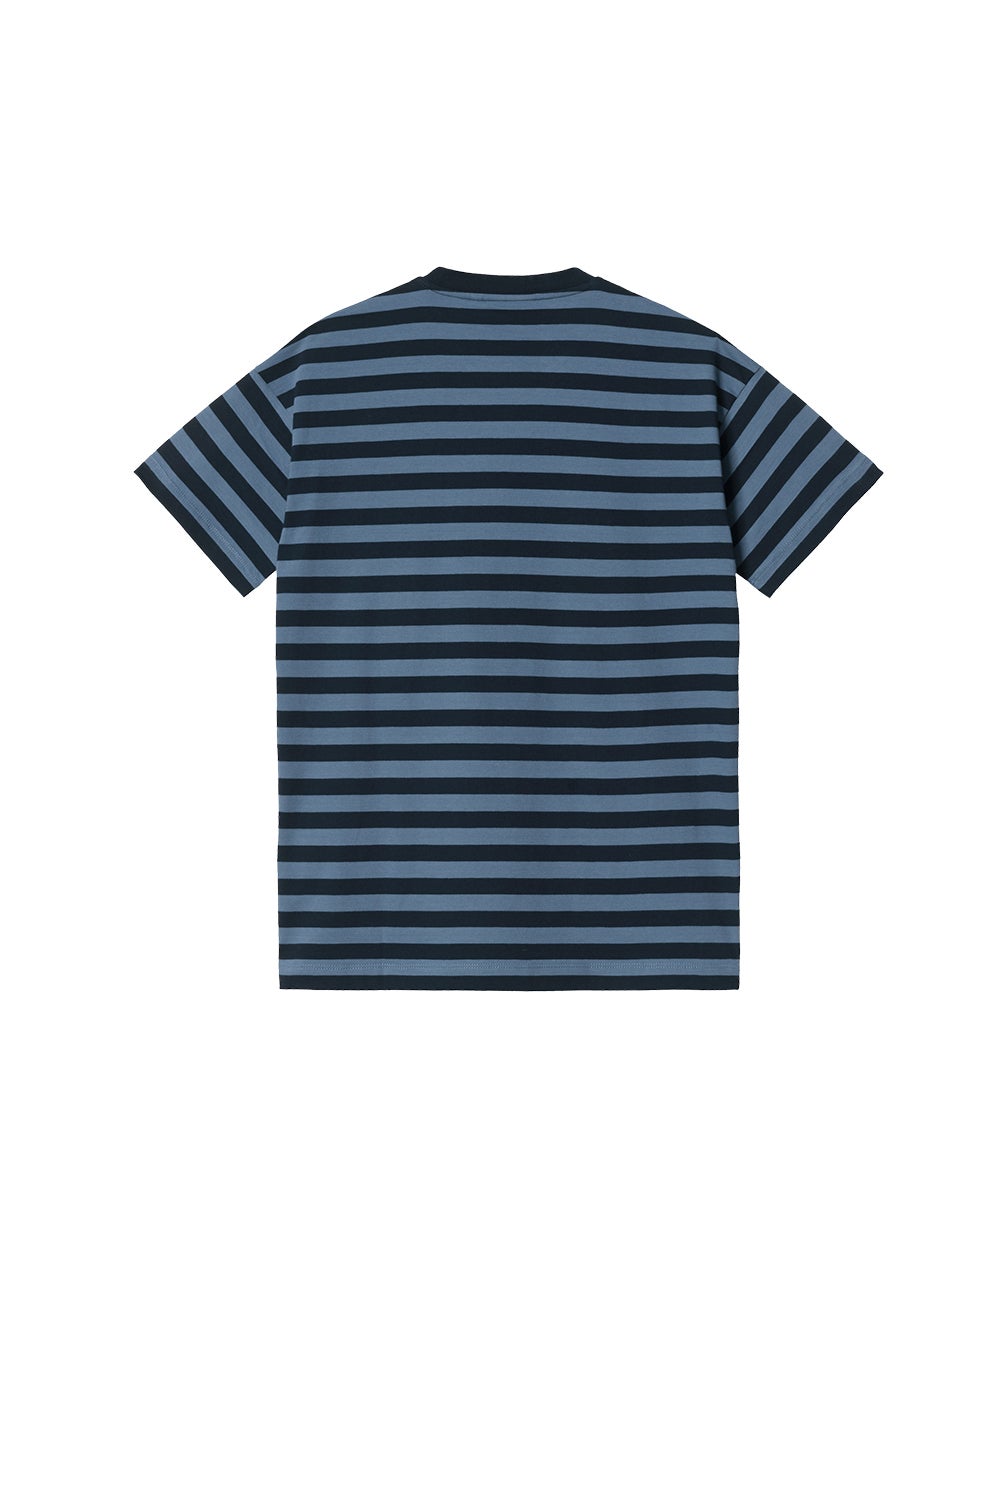 Carhartt WIP Scotty T-Shirt 